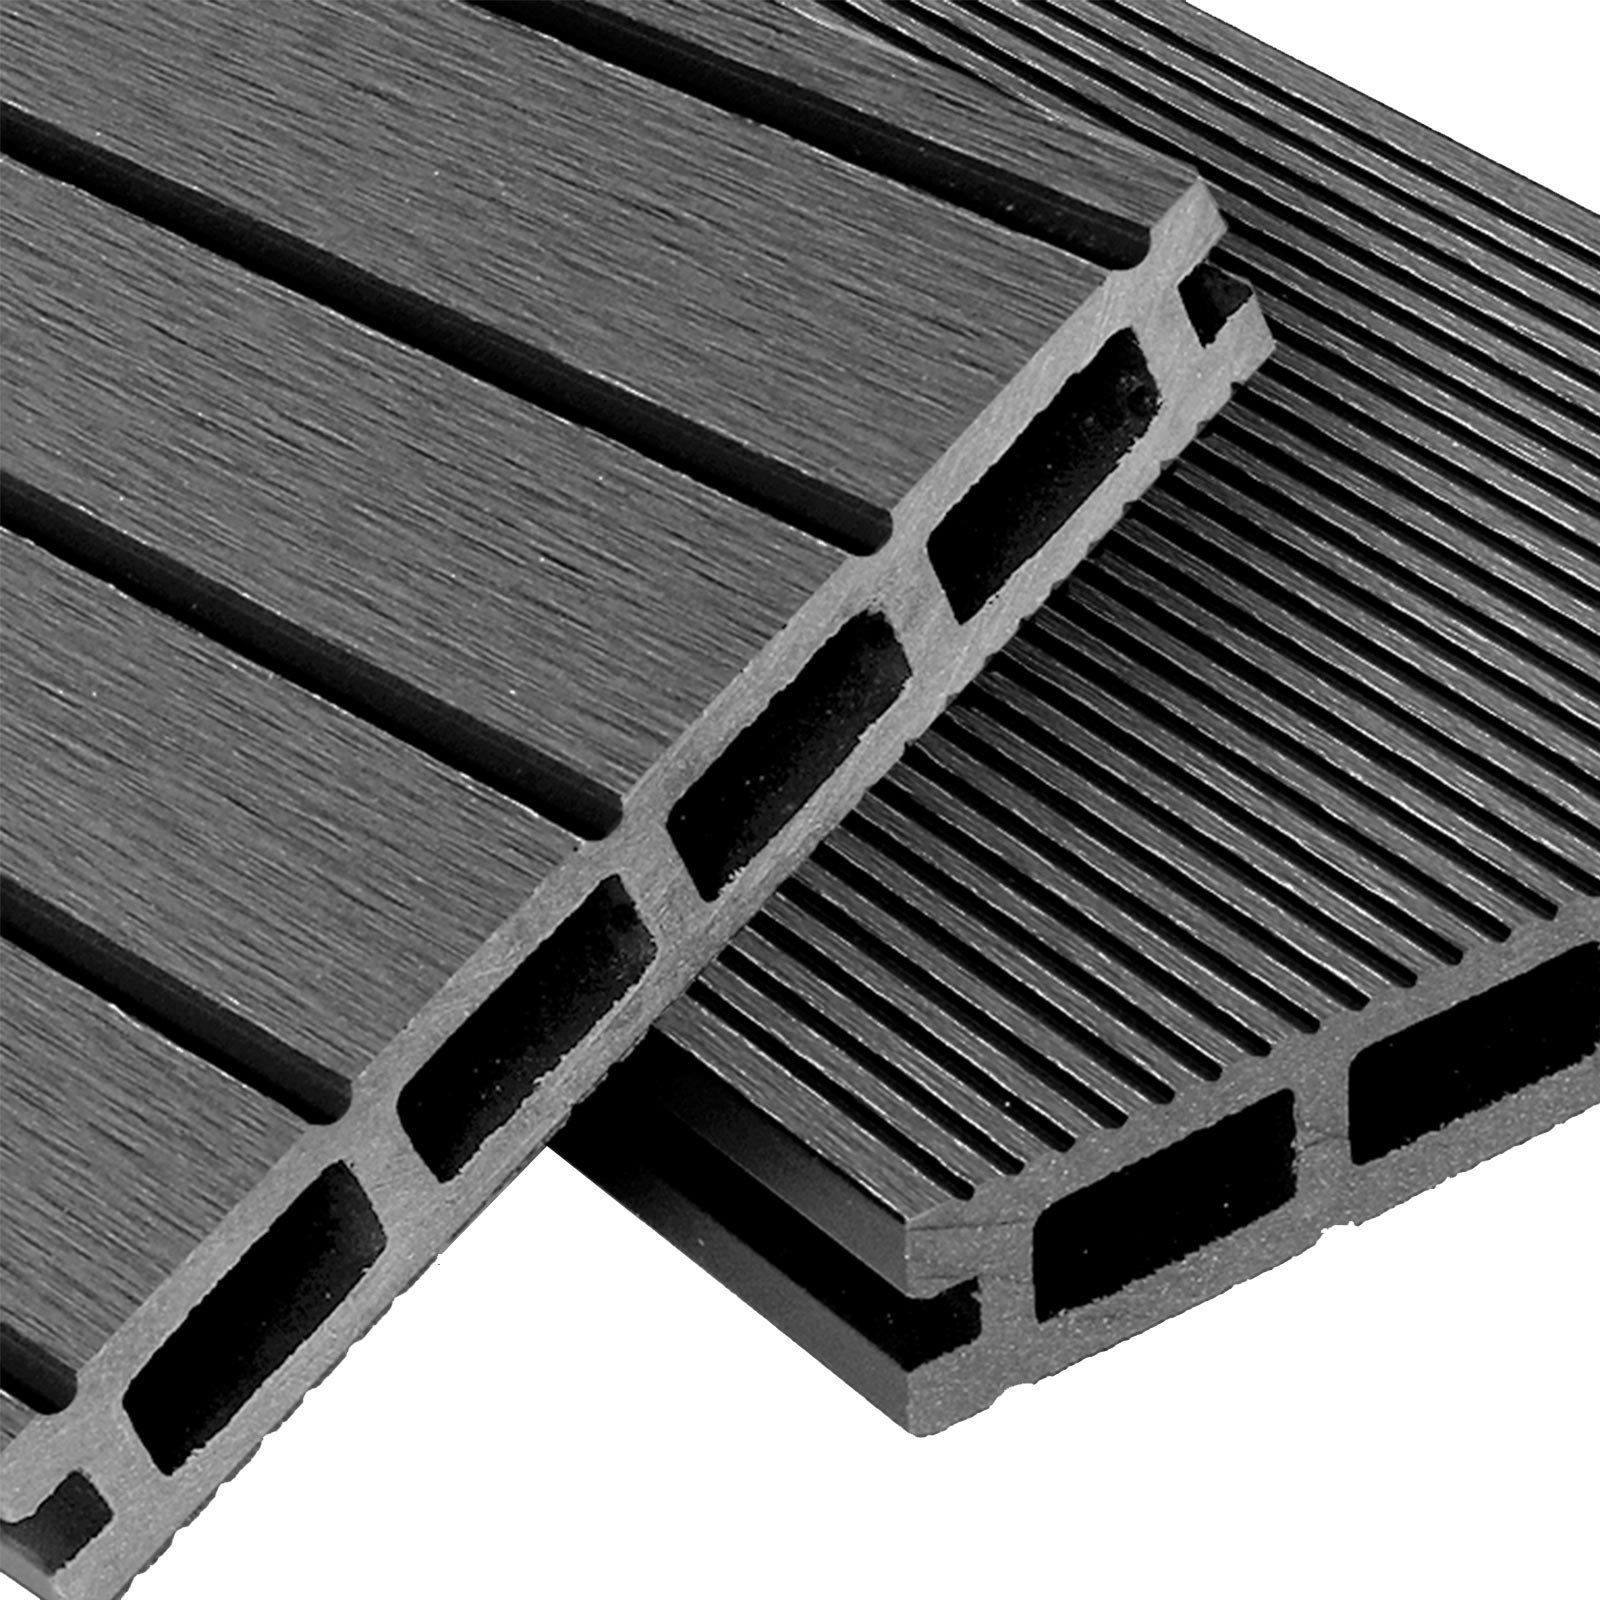 WPC Terrassendielen Basic Line - Komplett-Set hellgrau | 8m² (4m x 2m) Holz-Brett Dielen | Boden-Fliesen + Unterkonstruktion & Clips | Balkon Boden-Belag + rutschfest + witterungsbeständig